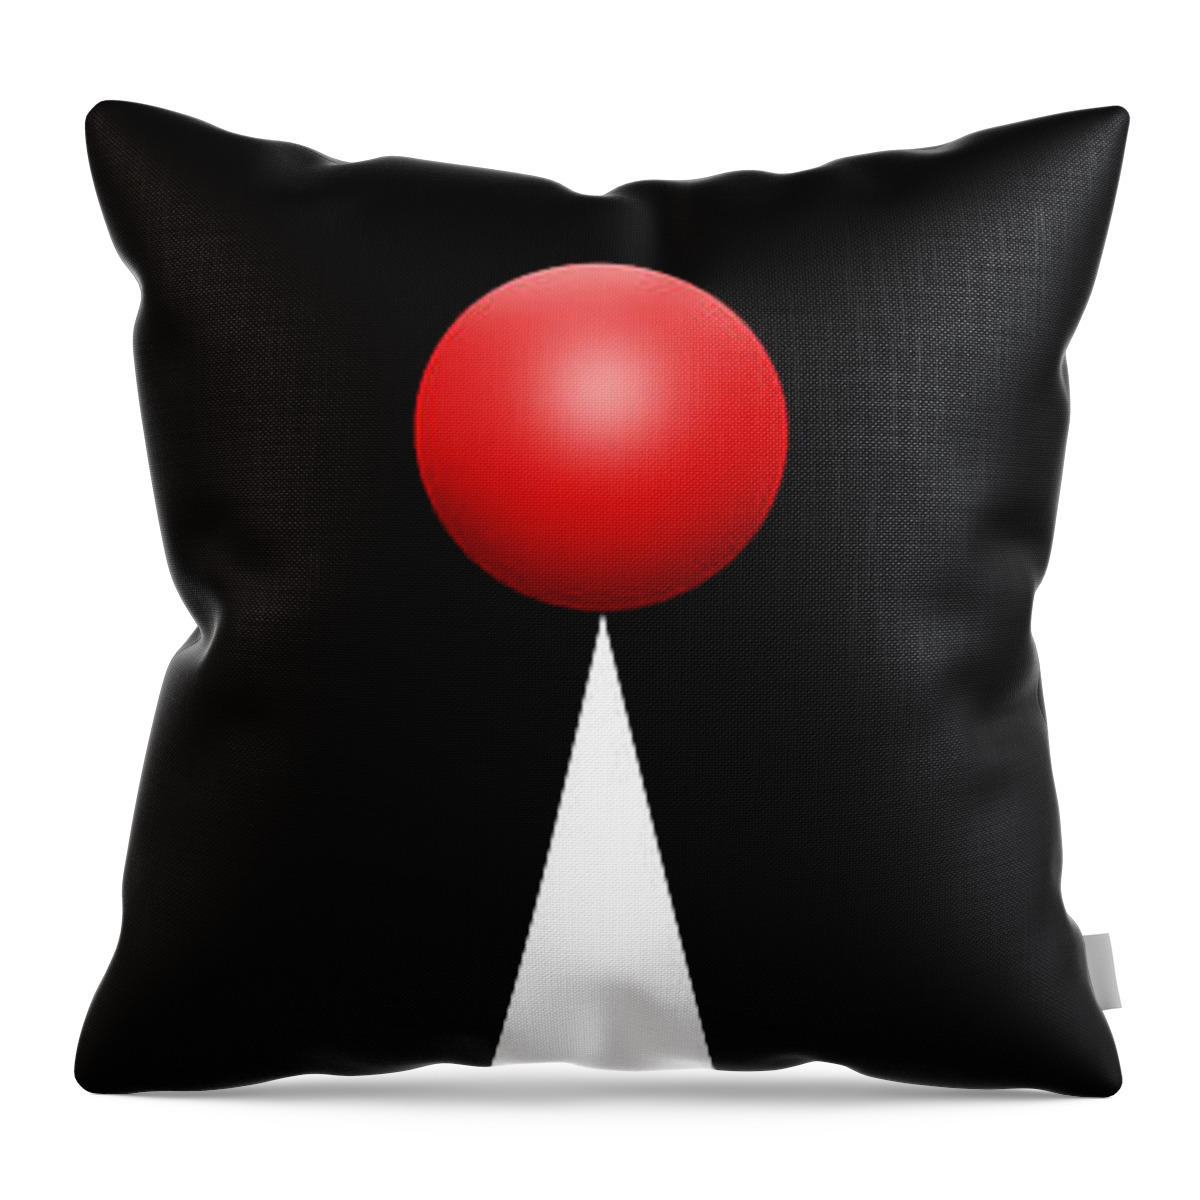 Pop Art Throw Pillow featuring the photograph Red Ball 28 by Mike McGlothlen